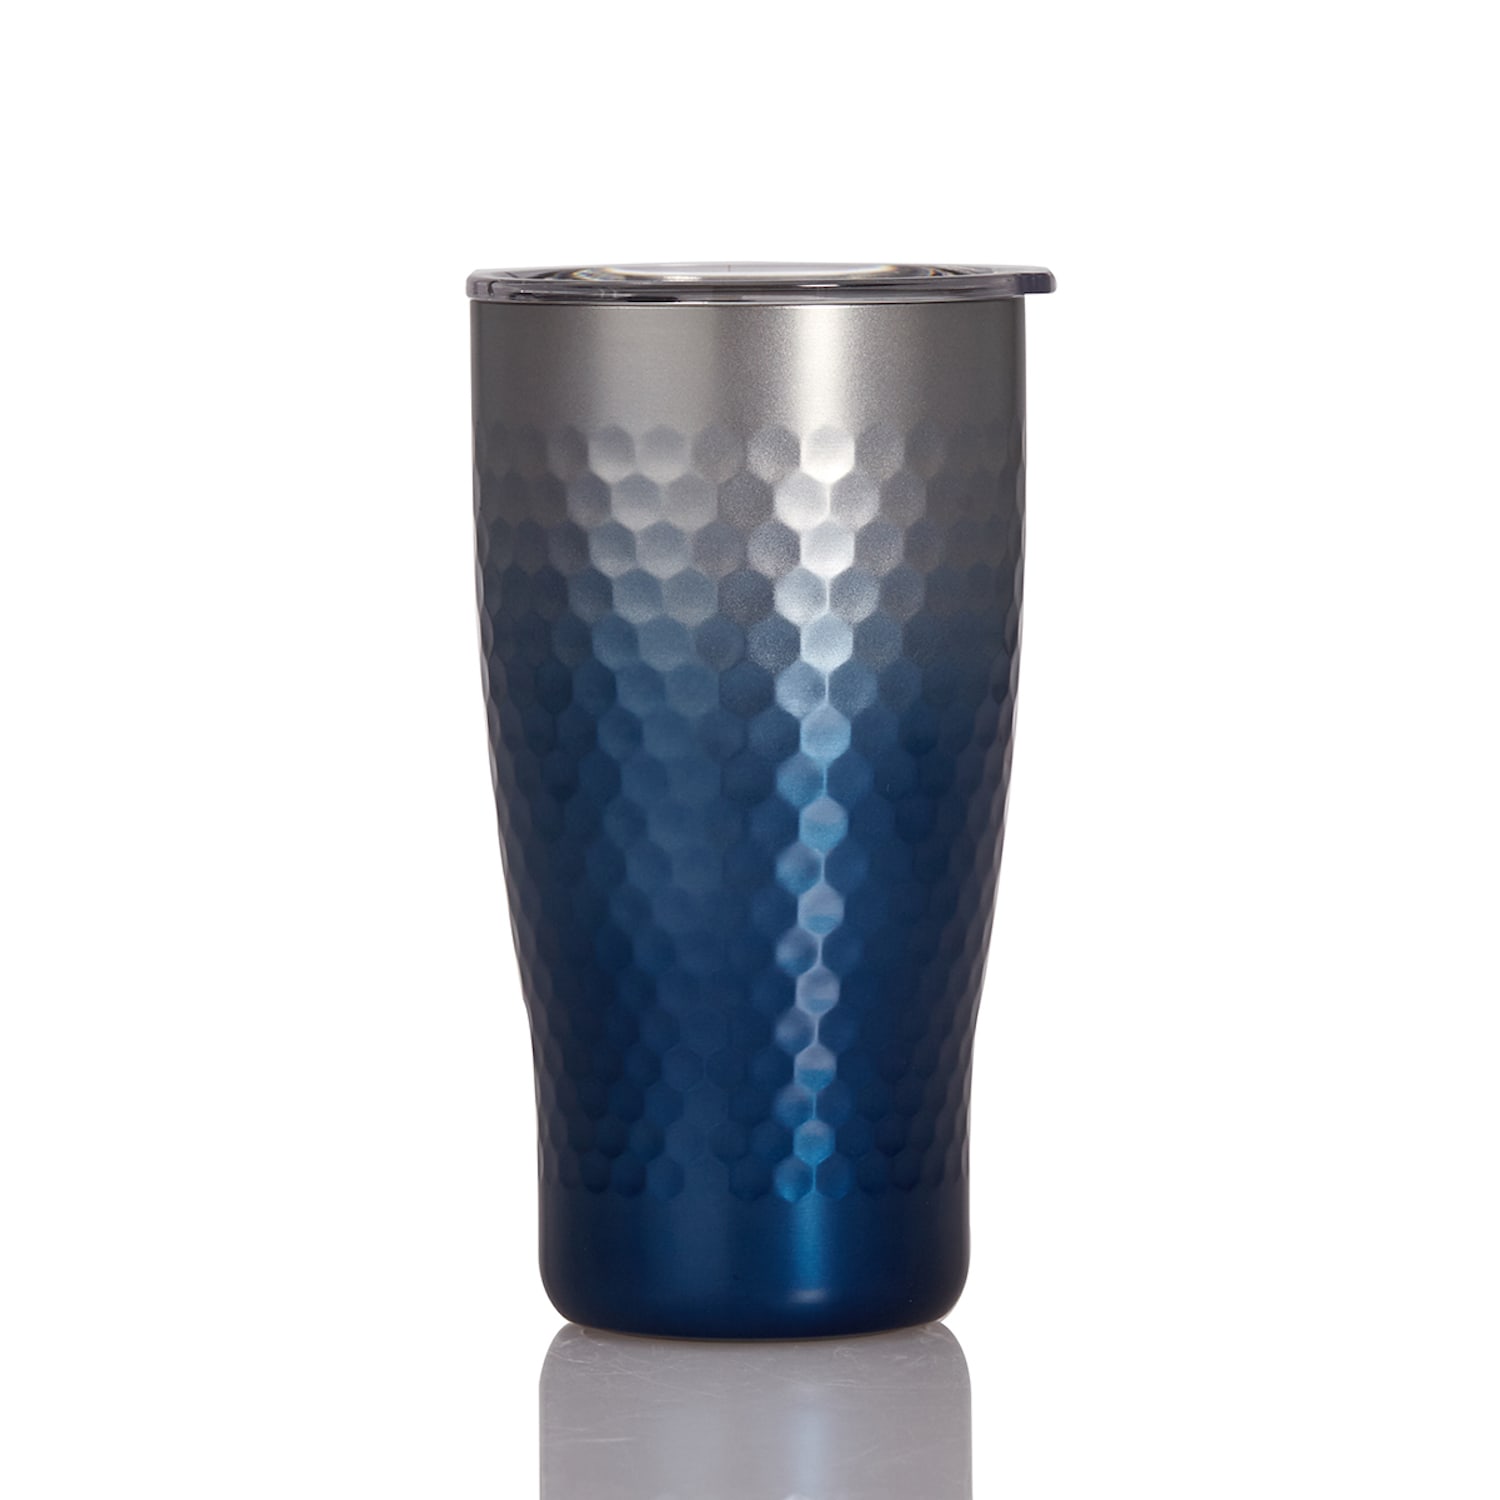 Acera Liven Glow™ Harmony Honey Comb Ceramic-coated Stainless Steel Tumbler - Blue